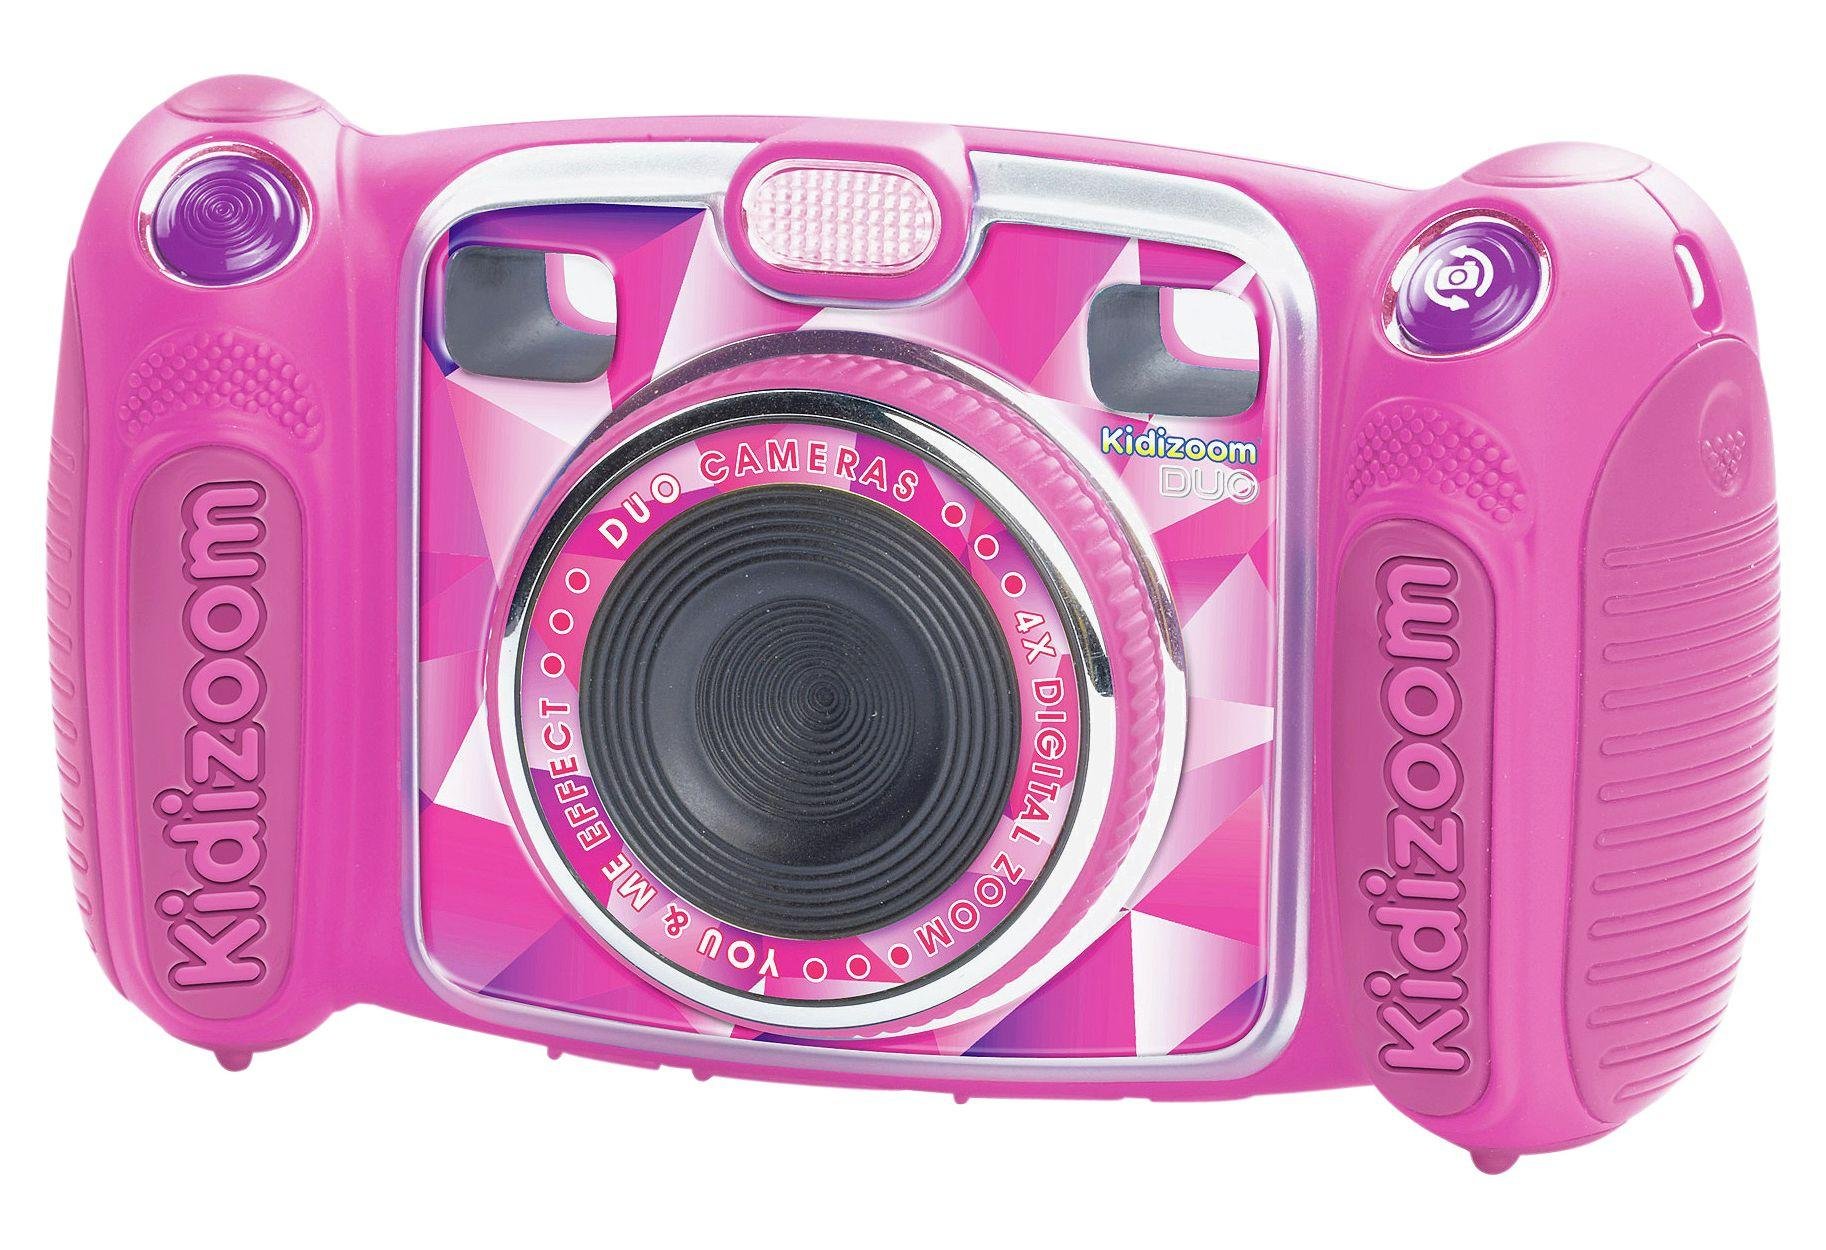 VTech Kidizoom Duo Camera – Pink